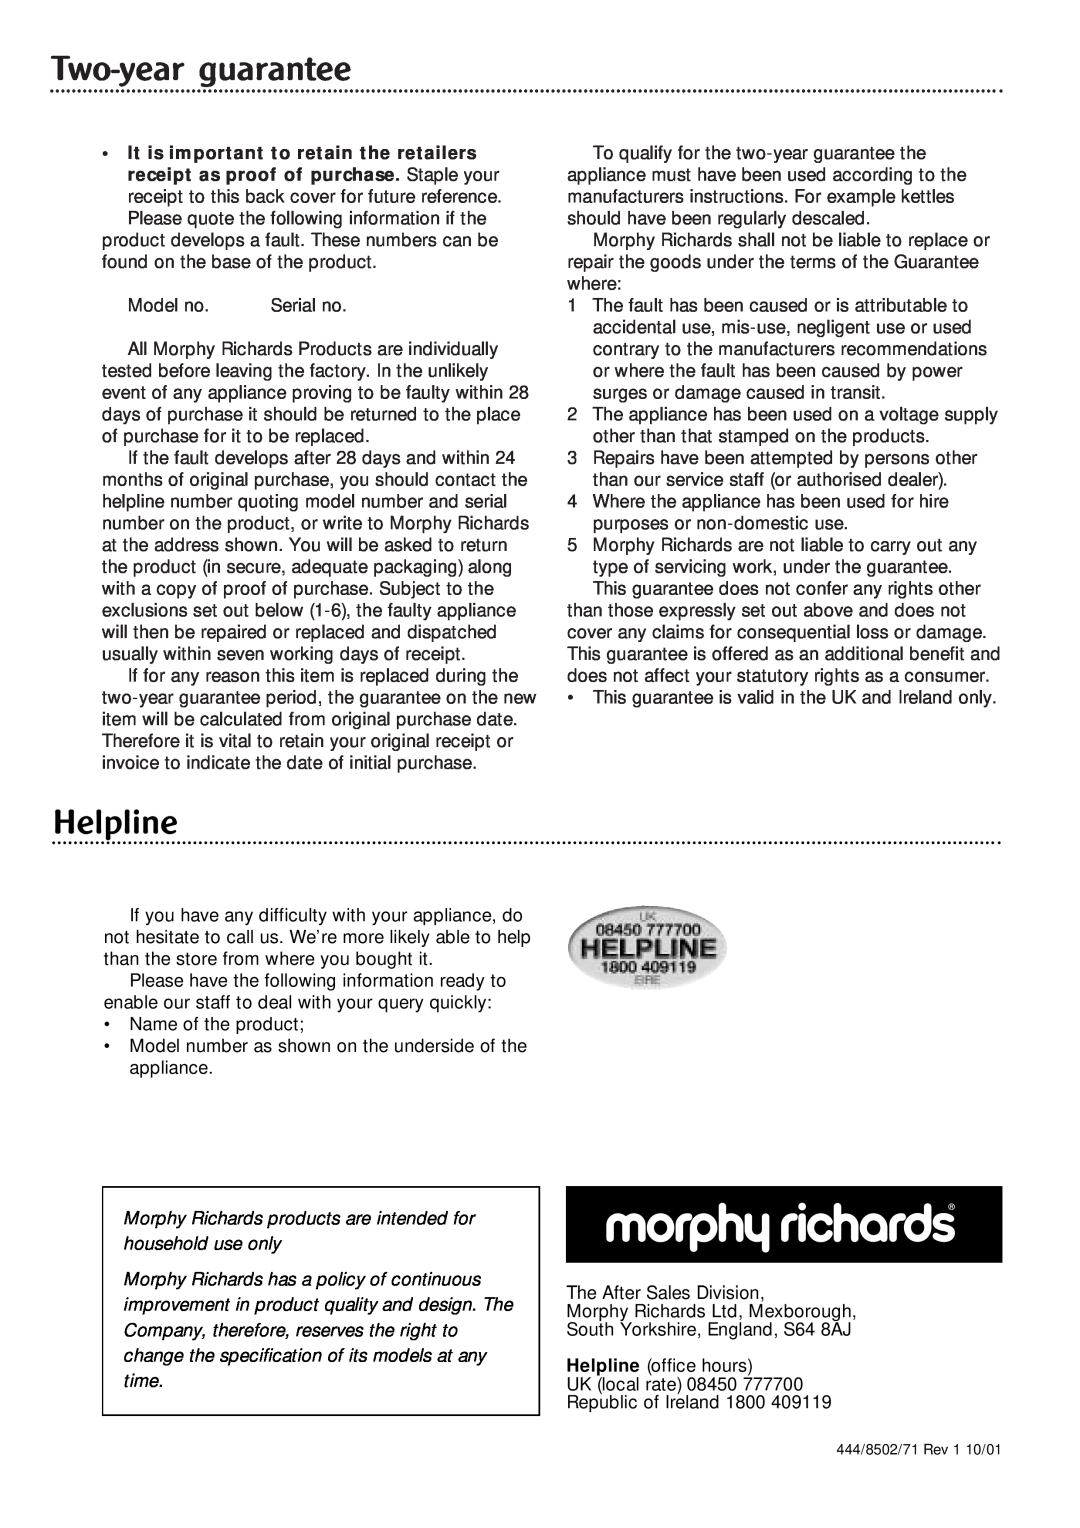 Morphy Richards Fastbake breadmaker manual Two-yearguarantee, Helpline 